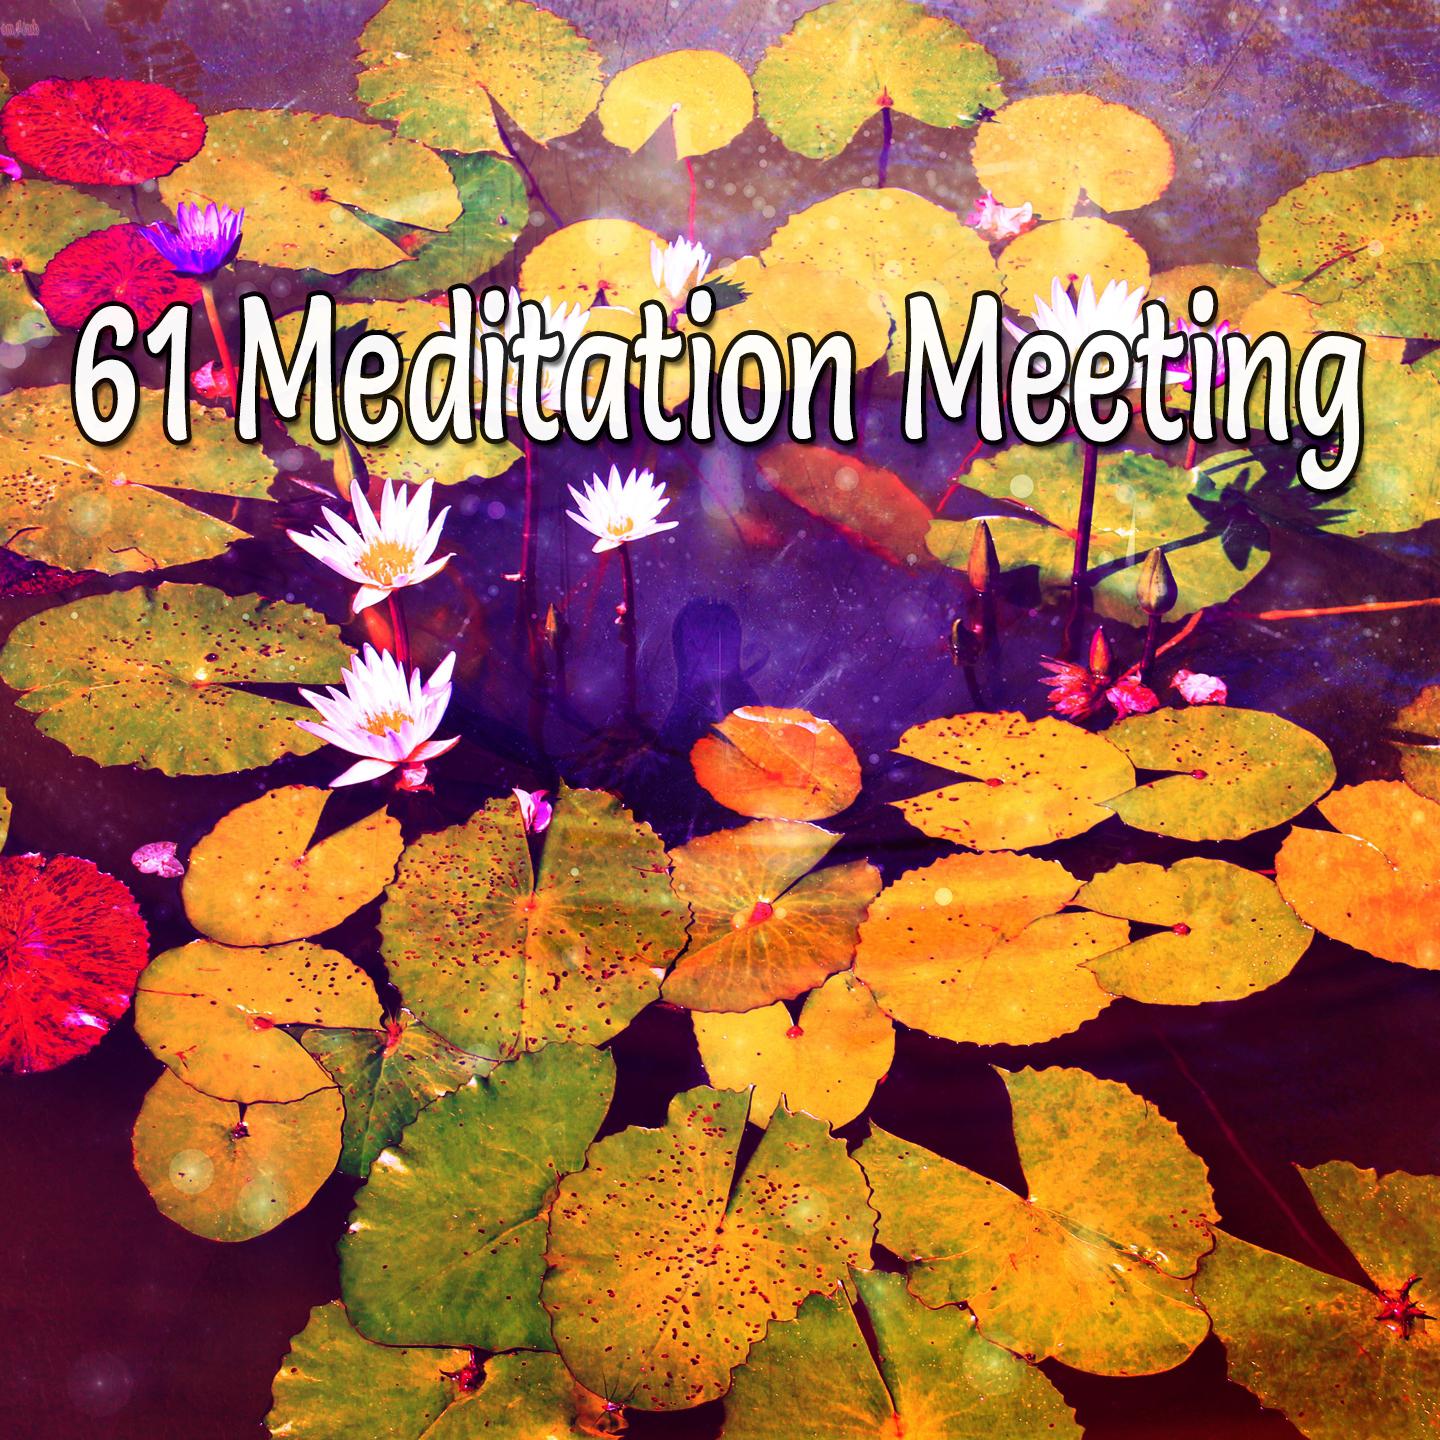 61 Meditation Meeting